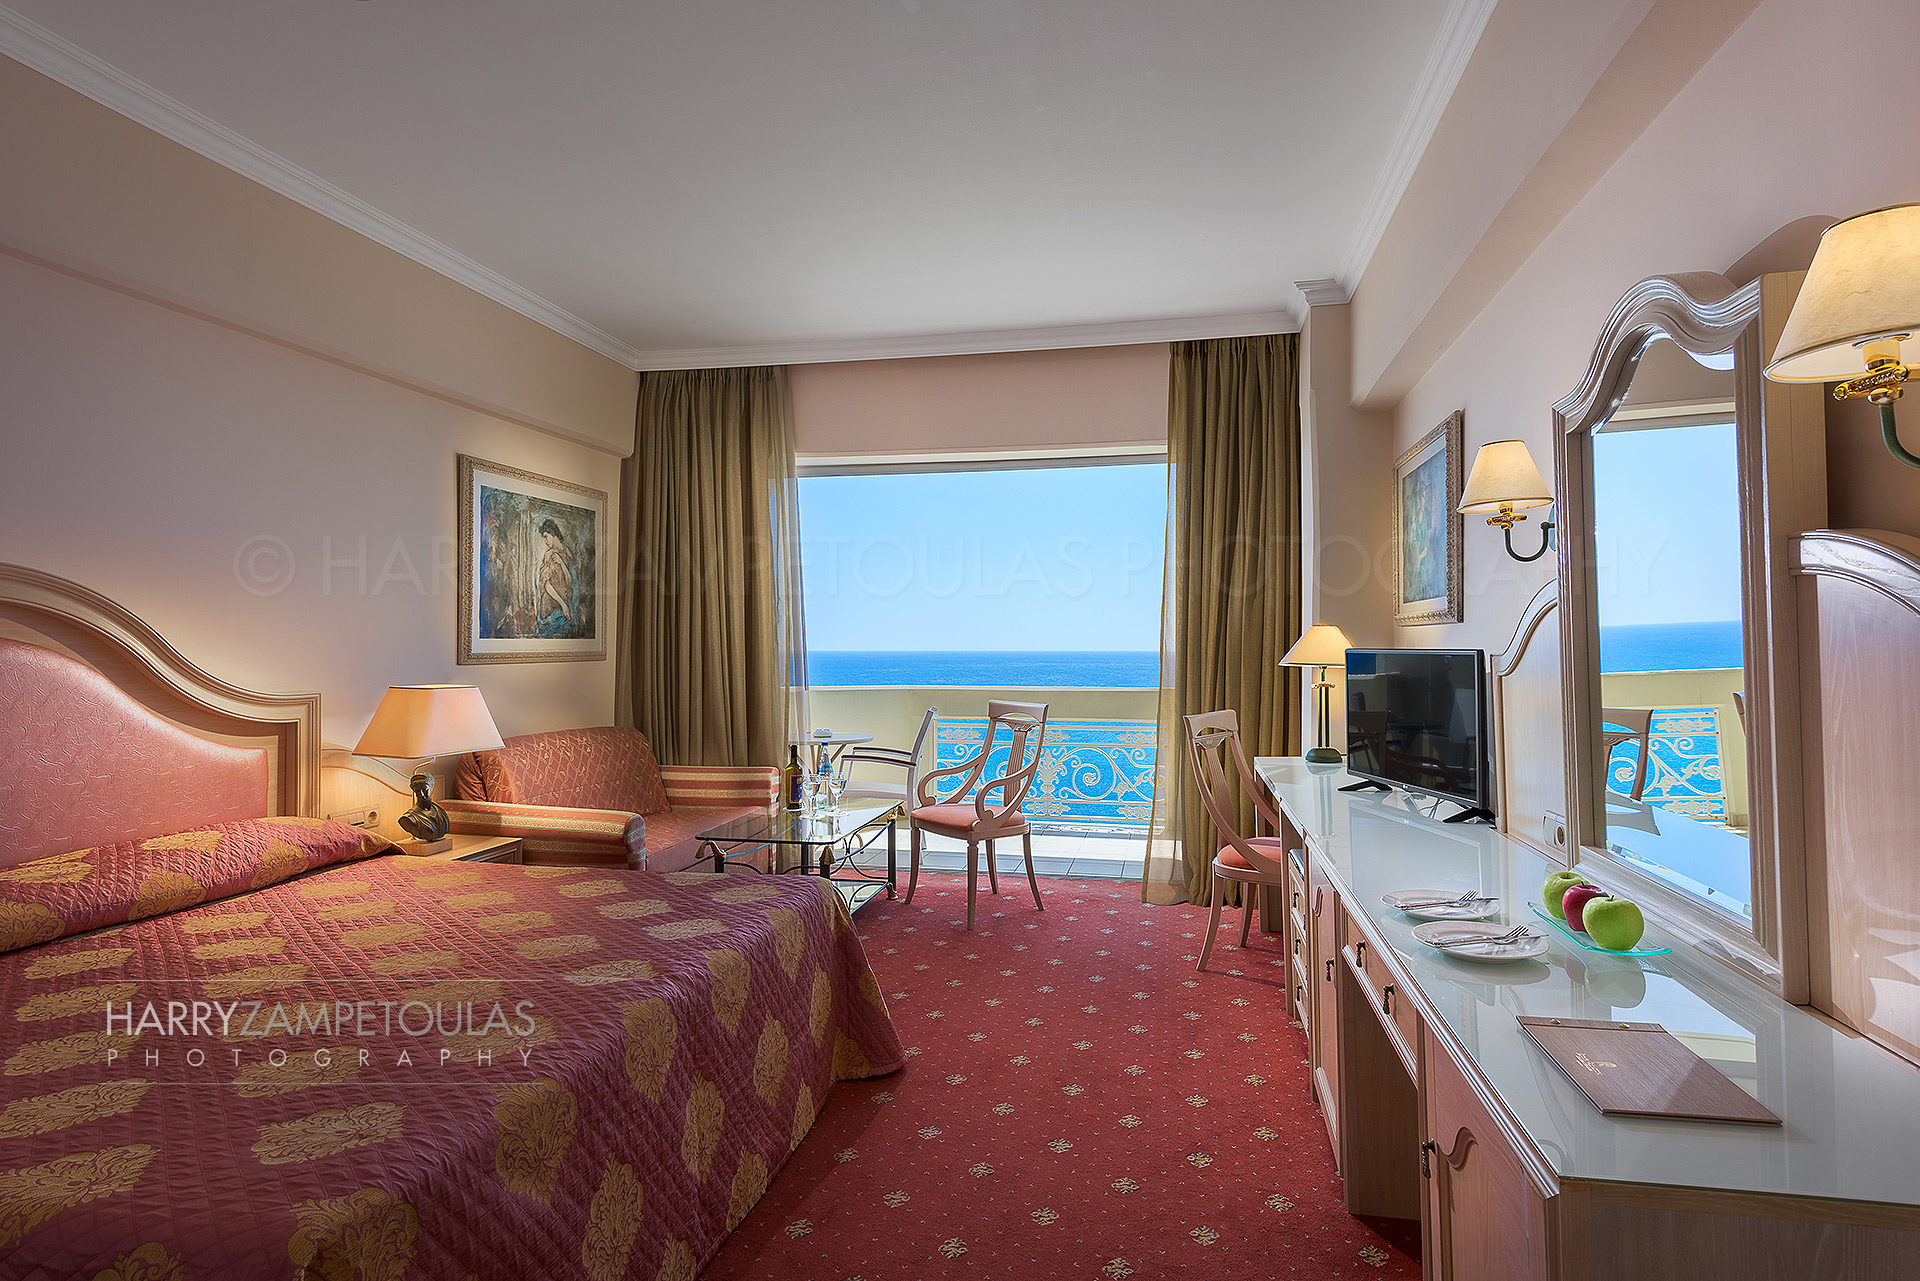 Rodos Palladium Hotel - Superior Seaview room - Hotel Photography by Harry Zampetoulas, Rhodes